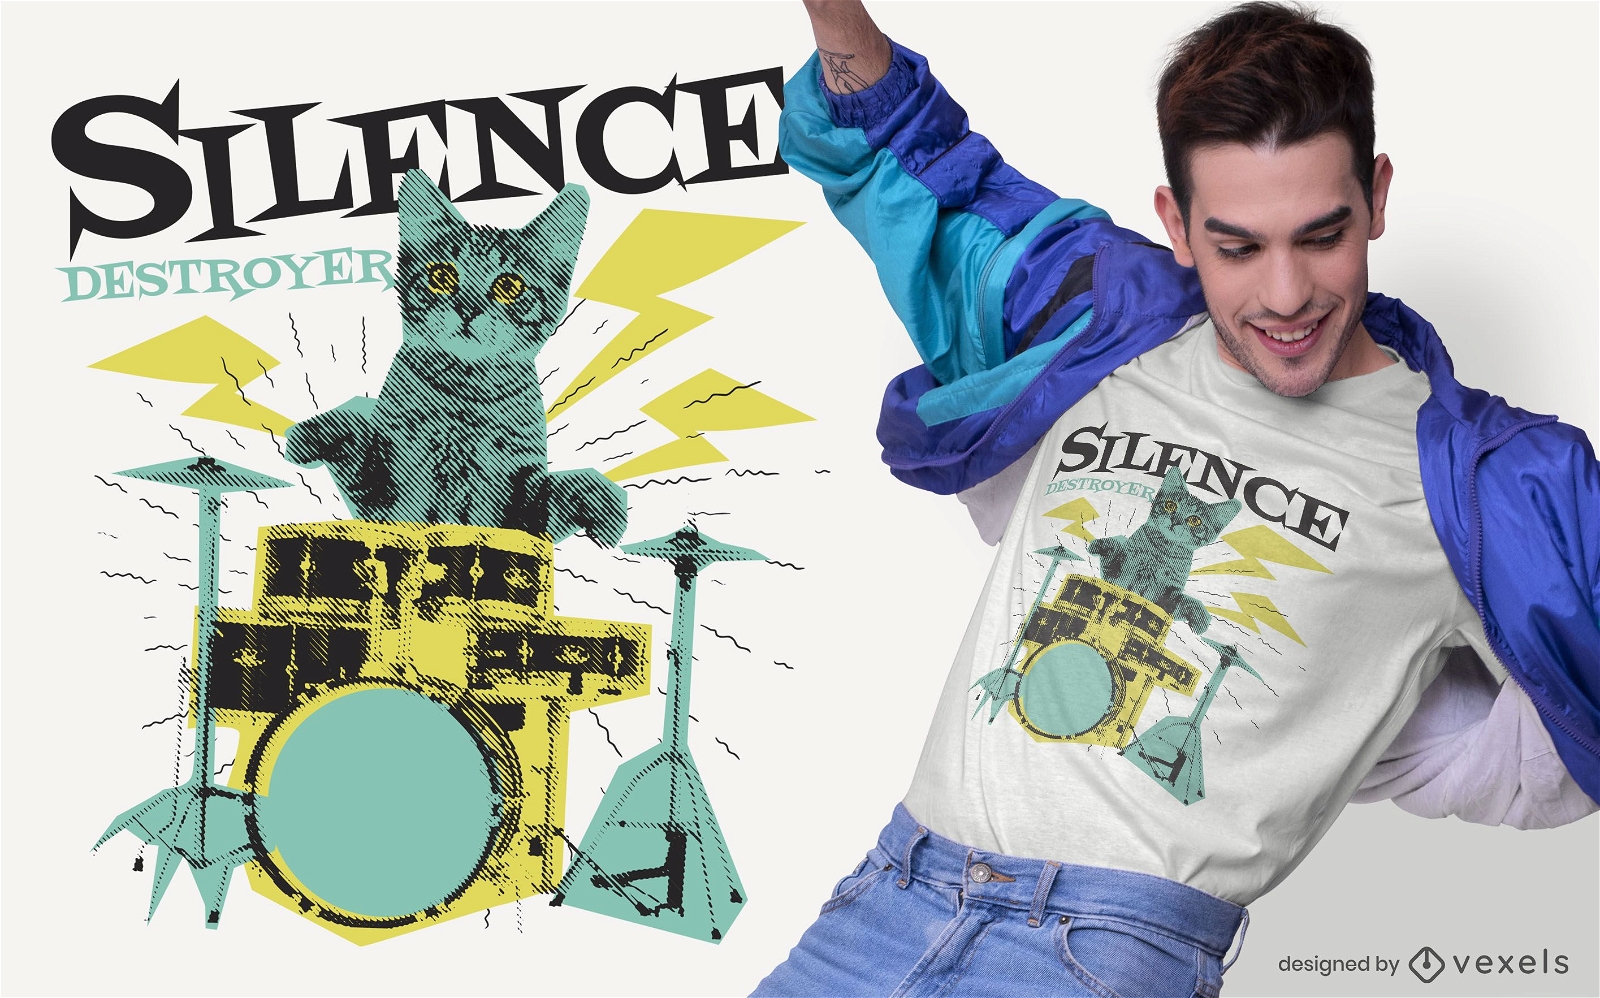 Silence destroyer cat t-shirt design